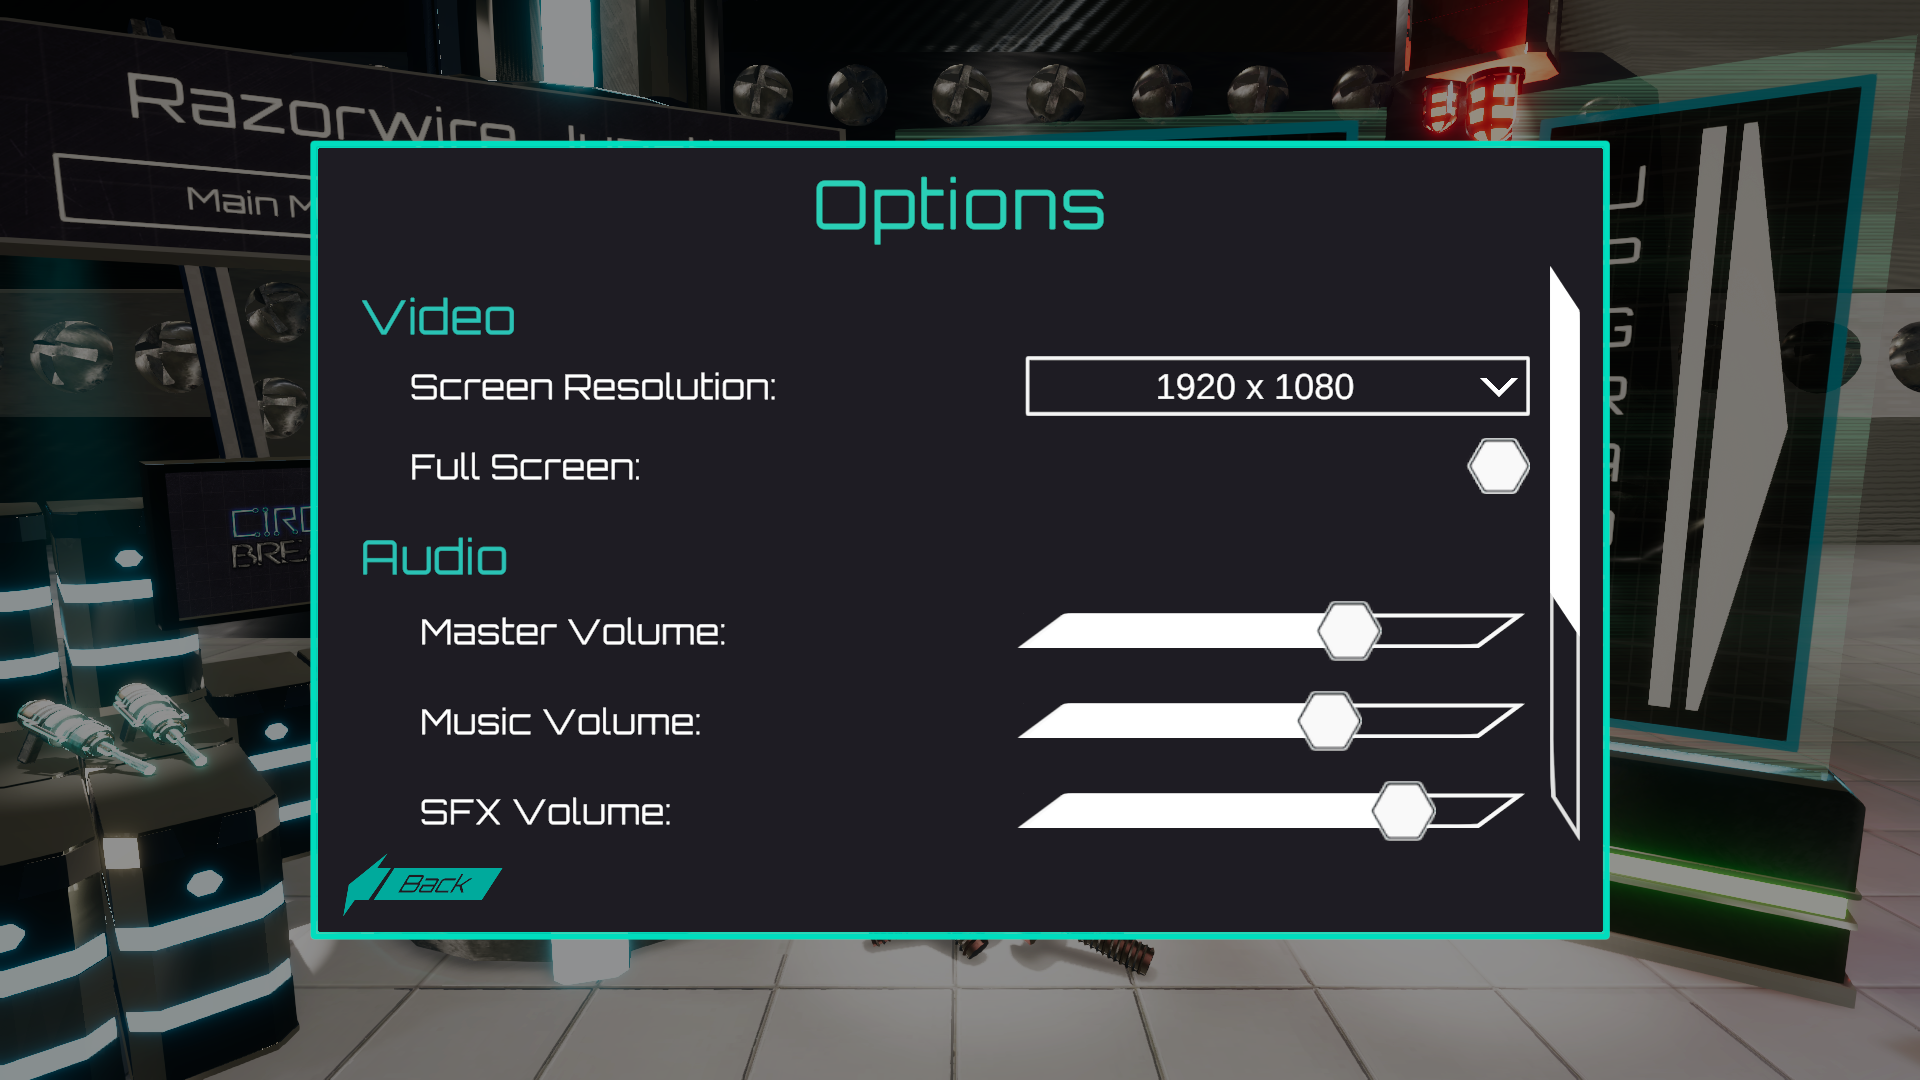 Showing Options Menu UI from Circuit Breaker